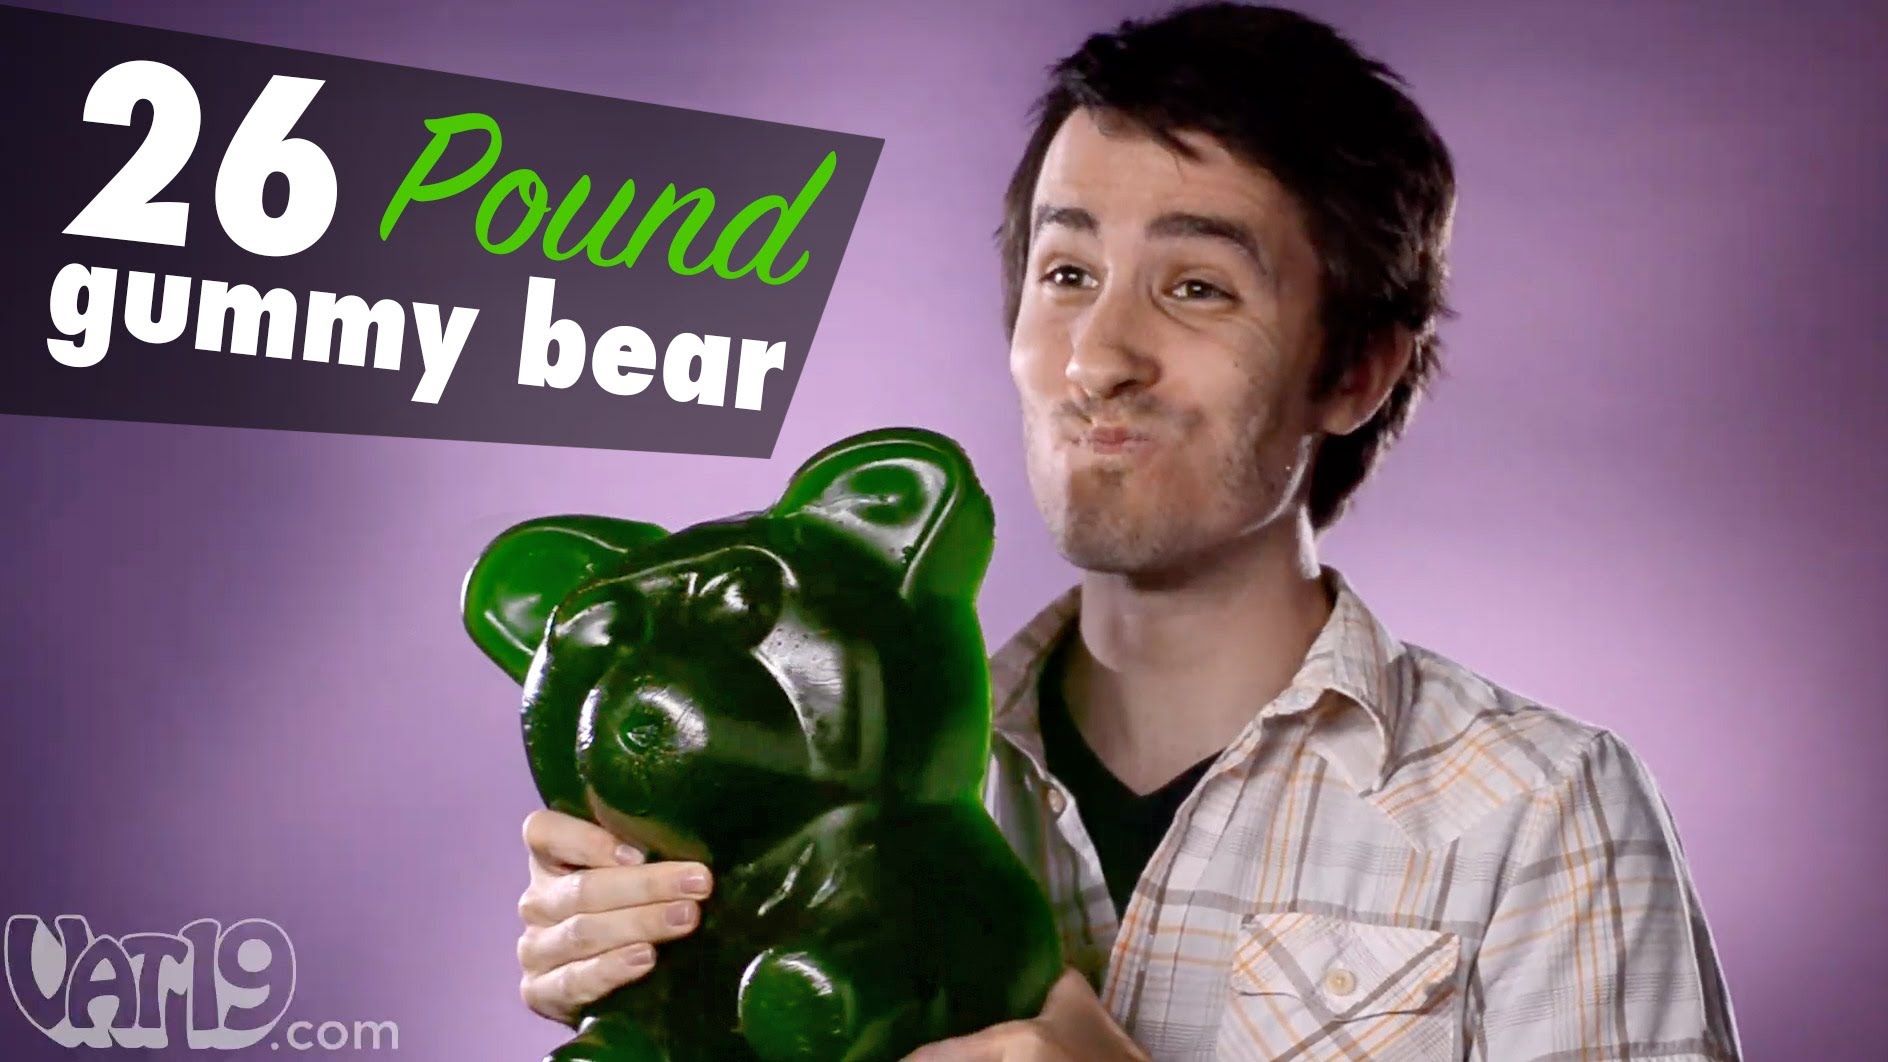 the-26-pound-party-gummy-bear.jpg